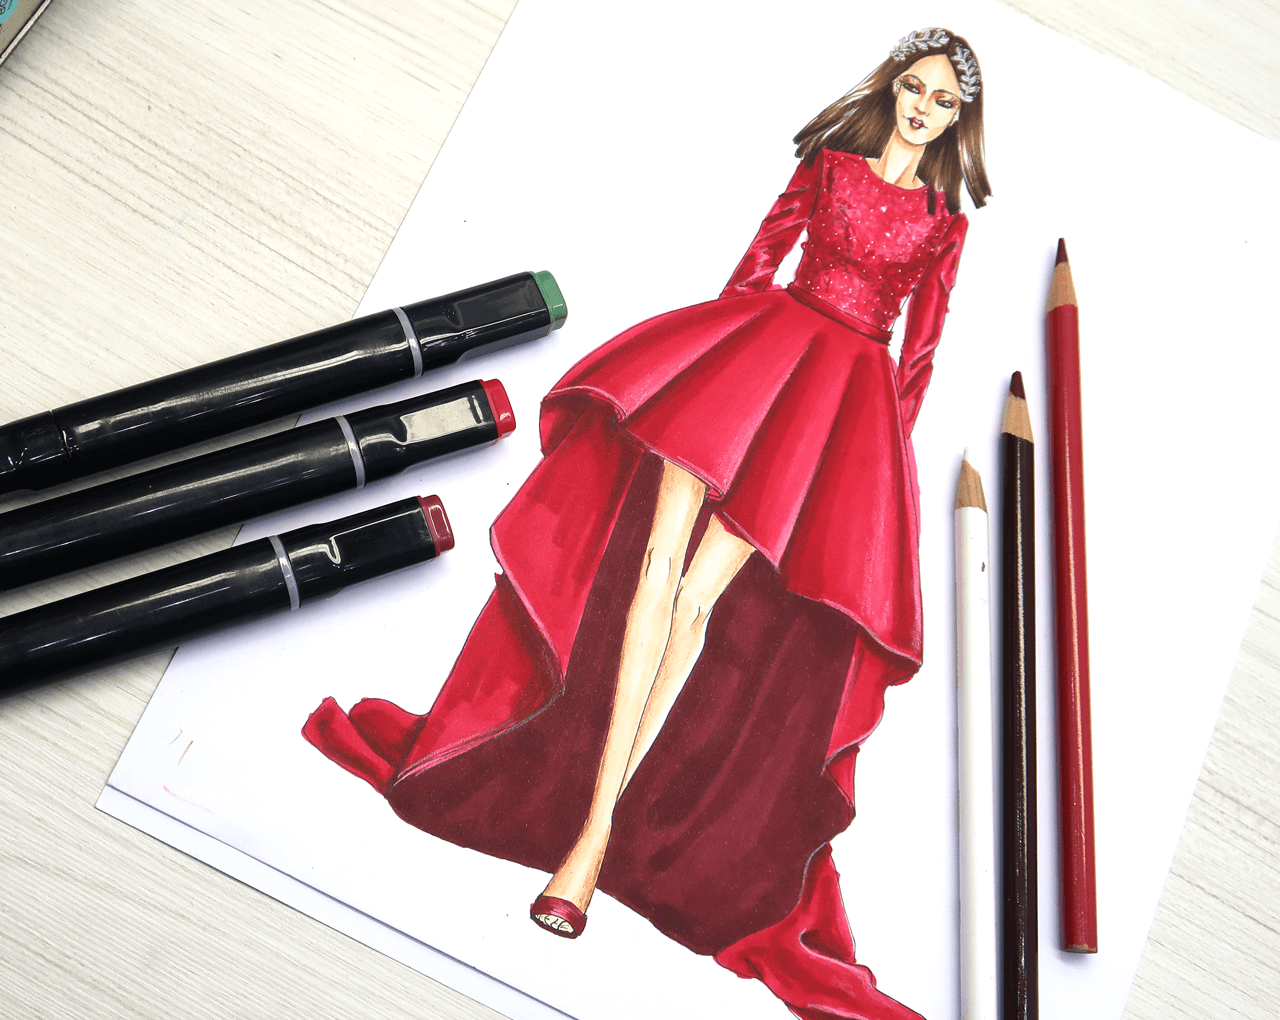 Vestido rojo de gala